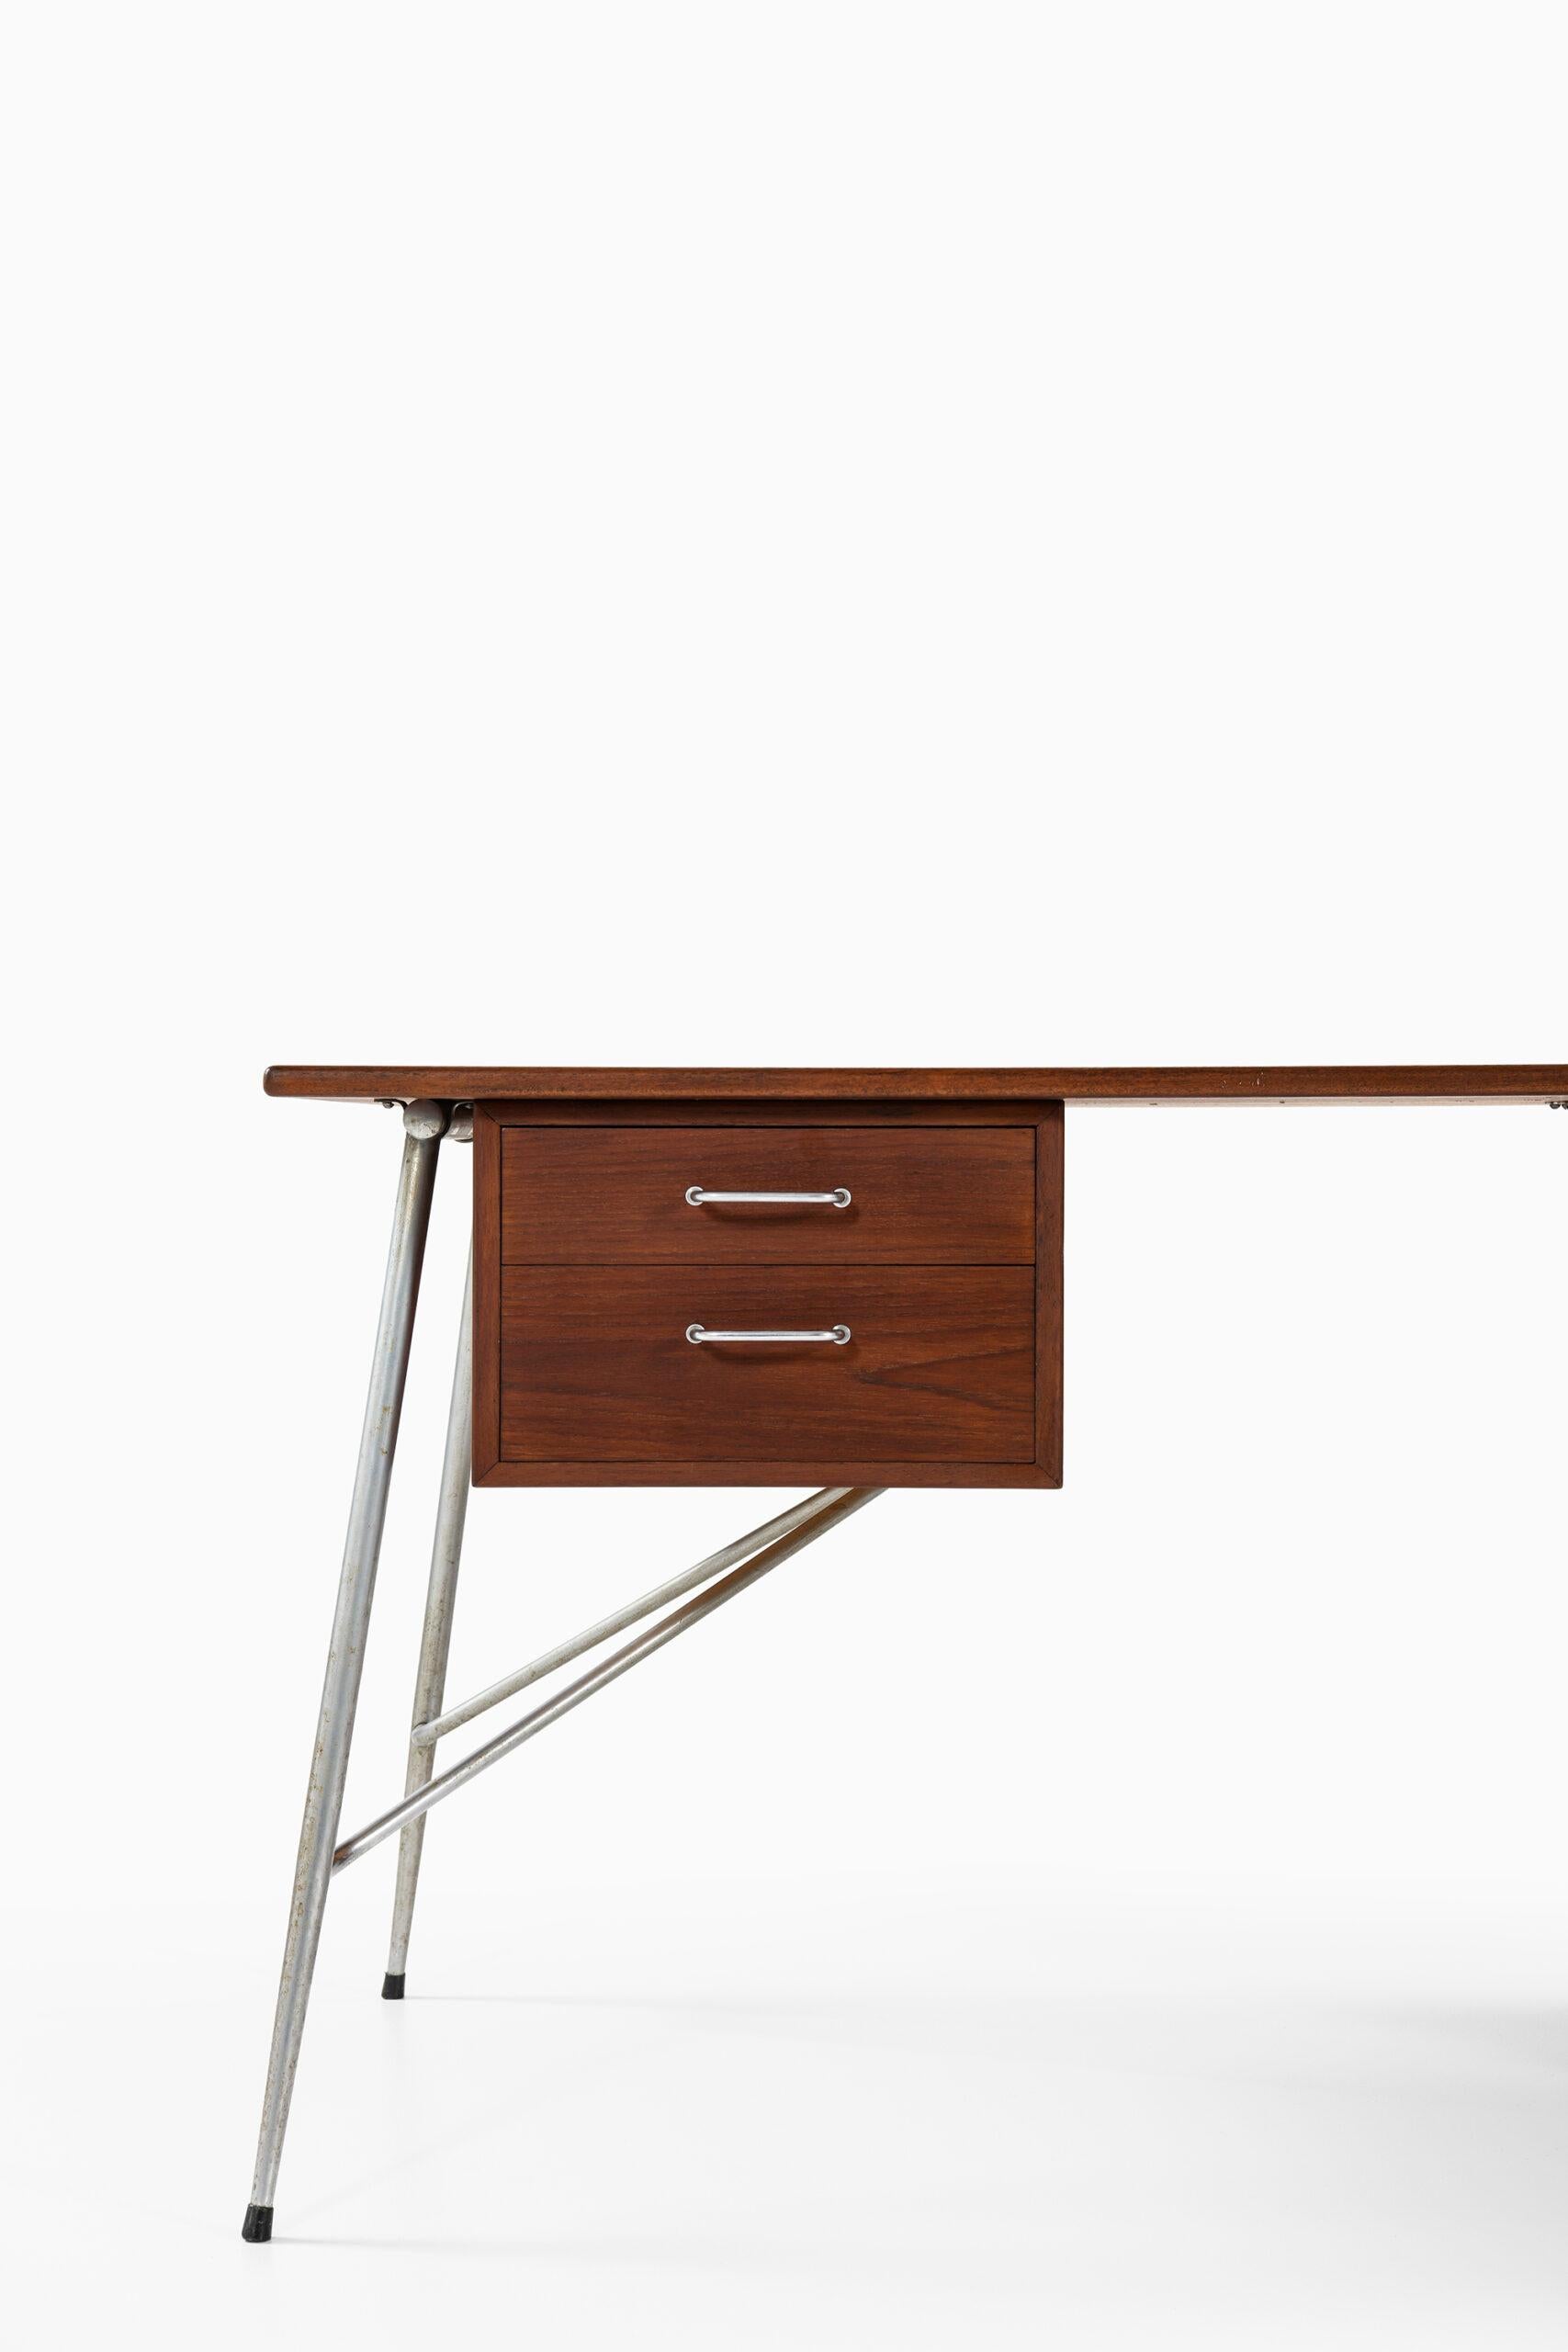 Rare desk designed by Børge Mogensen. Produced by Søborg Møbler in Denmark.
Dimensions (W x D x H): 133 ( 180 ) x 80 x 71 cm.